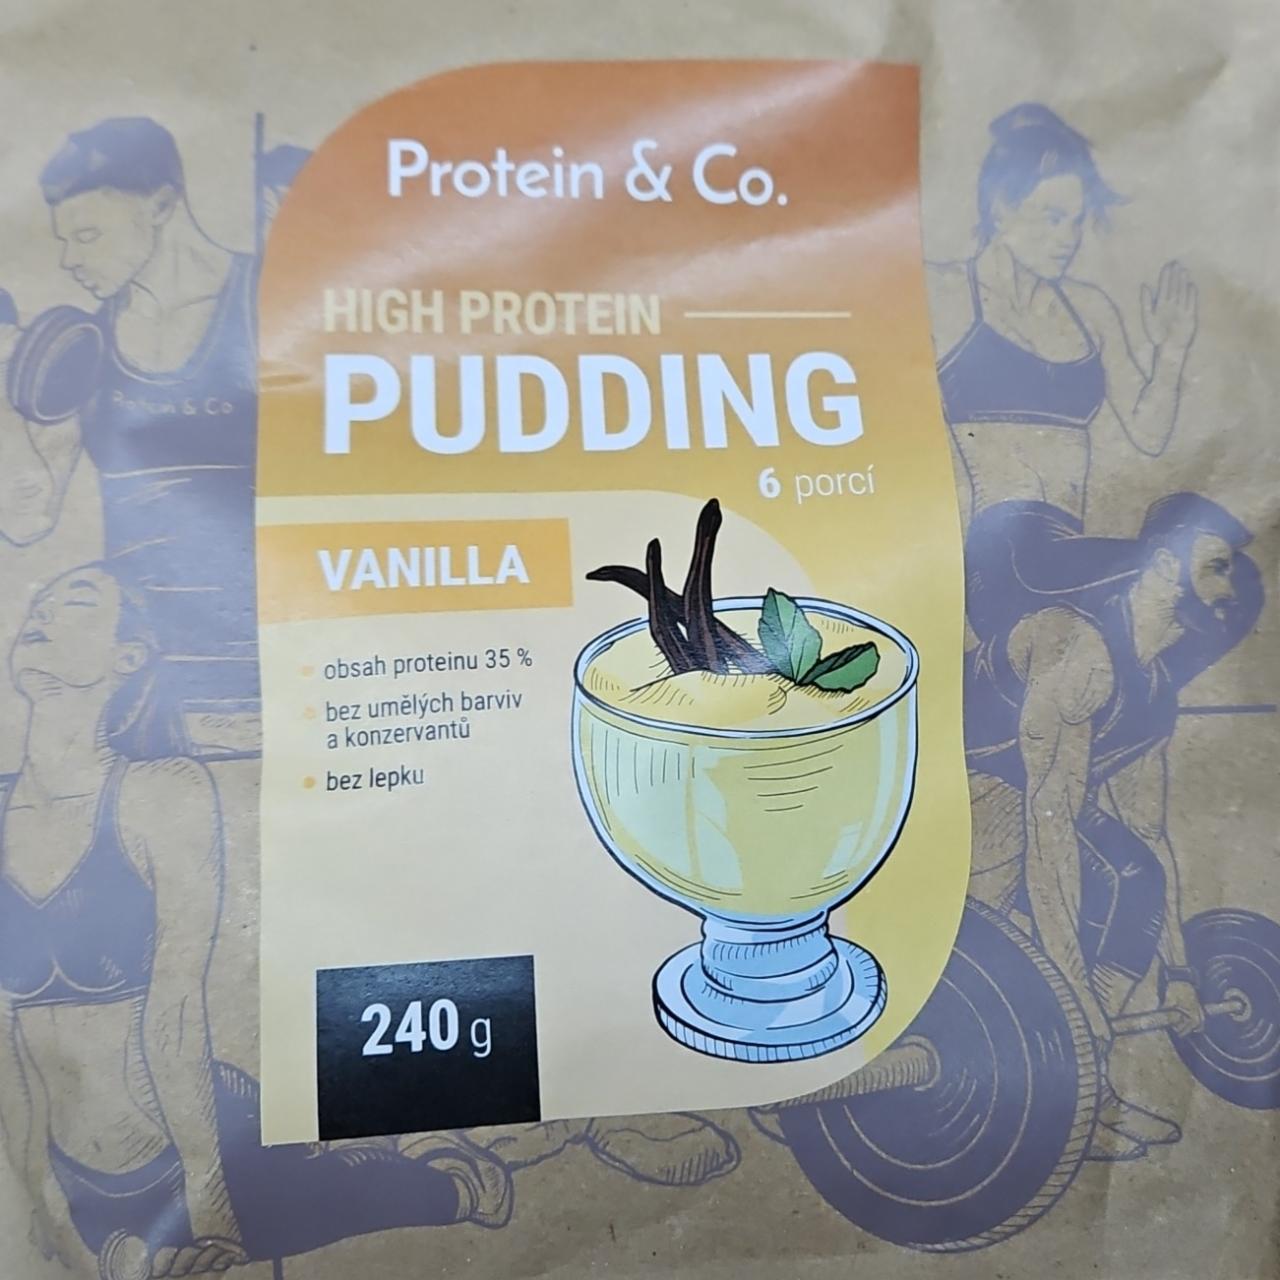 Fotografie - High Protein Pudding Vanilla Protein & Co.